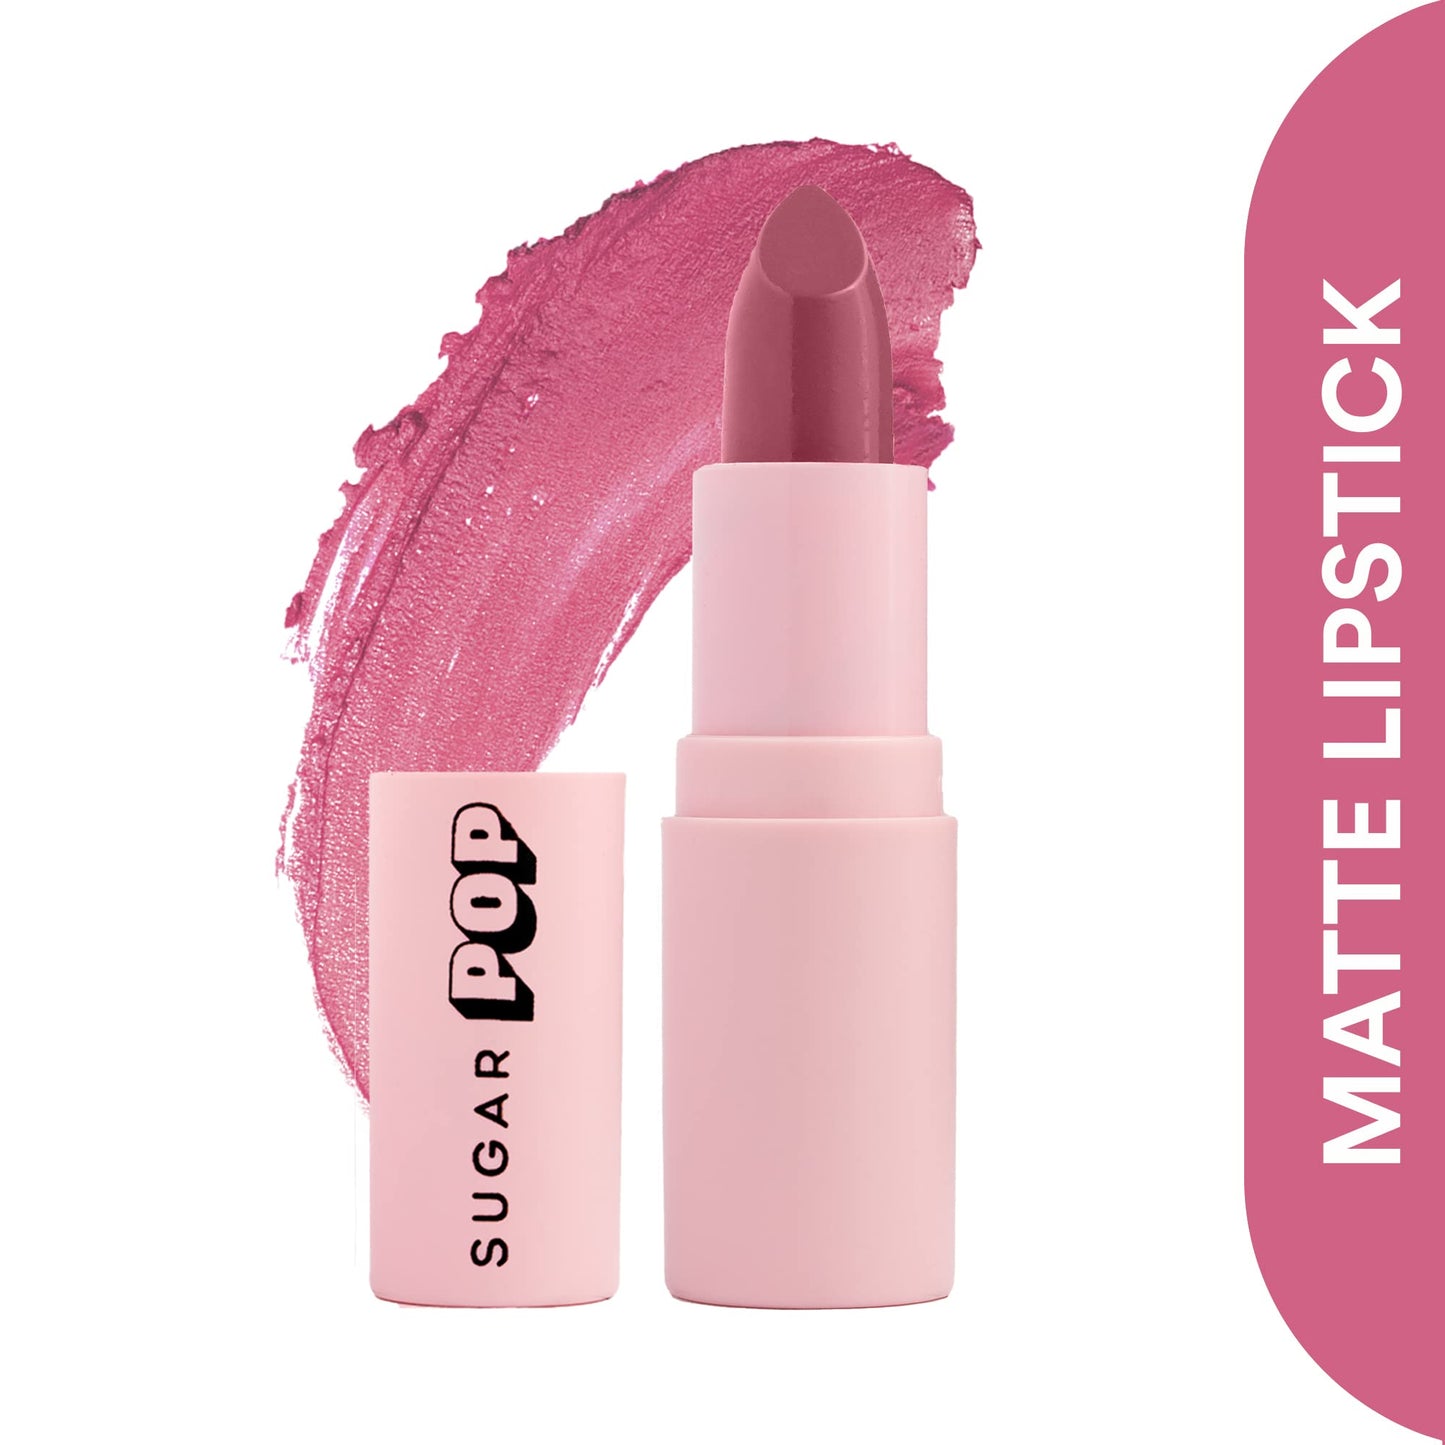 SUGAR POP Matte Lipstick - 01 Taupe (Dusty Rose) – 4.2 gm – l Lipstick for Women & SUGAR POP Nourishing Lip Balm, 4.5g - 02 Cherry (Cherry Red)